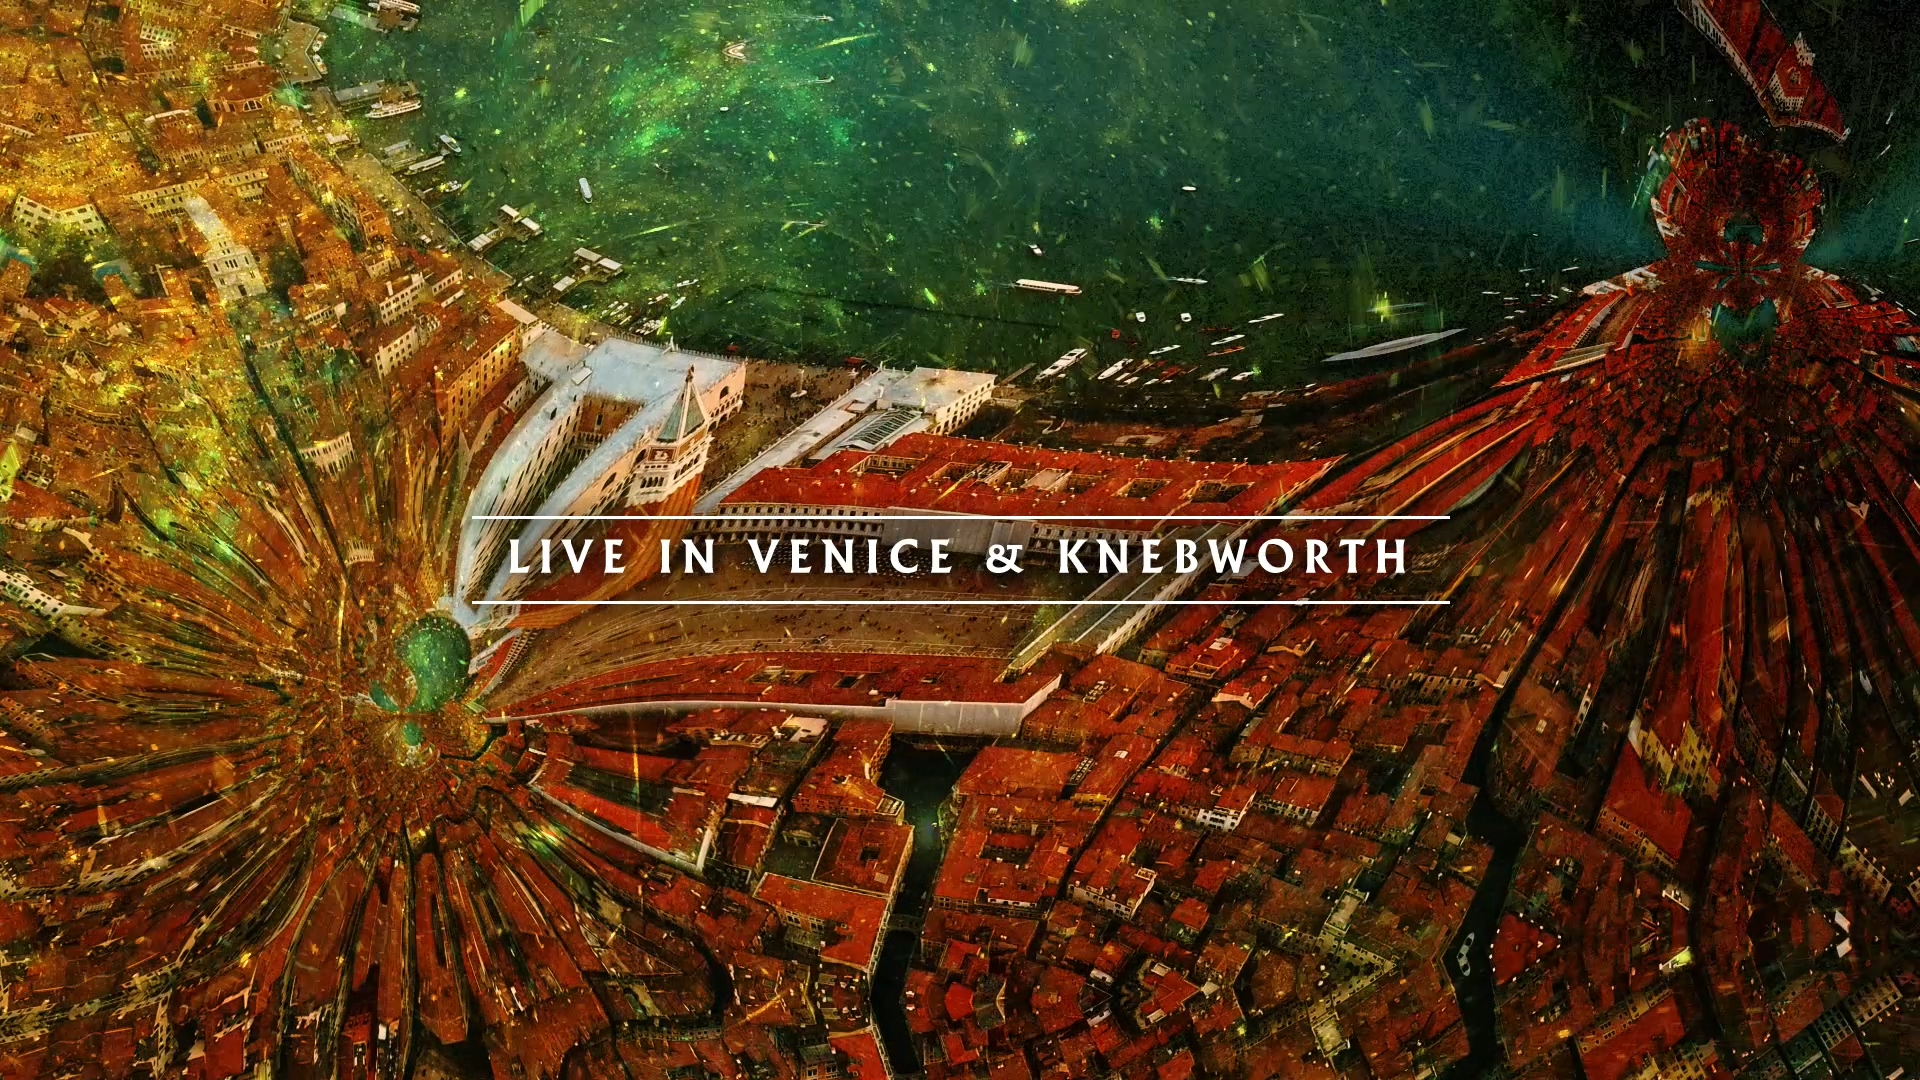 Venice.Concert.1989.and.Knebworth.Concert.1990_20200115_191305.959.jpg